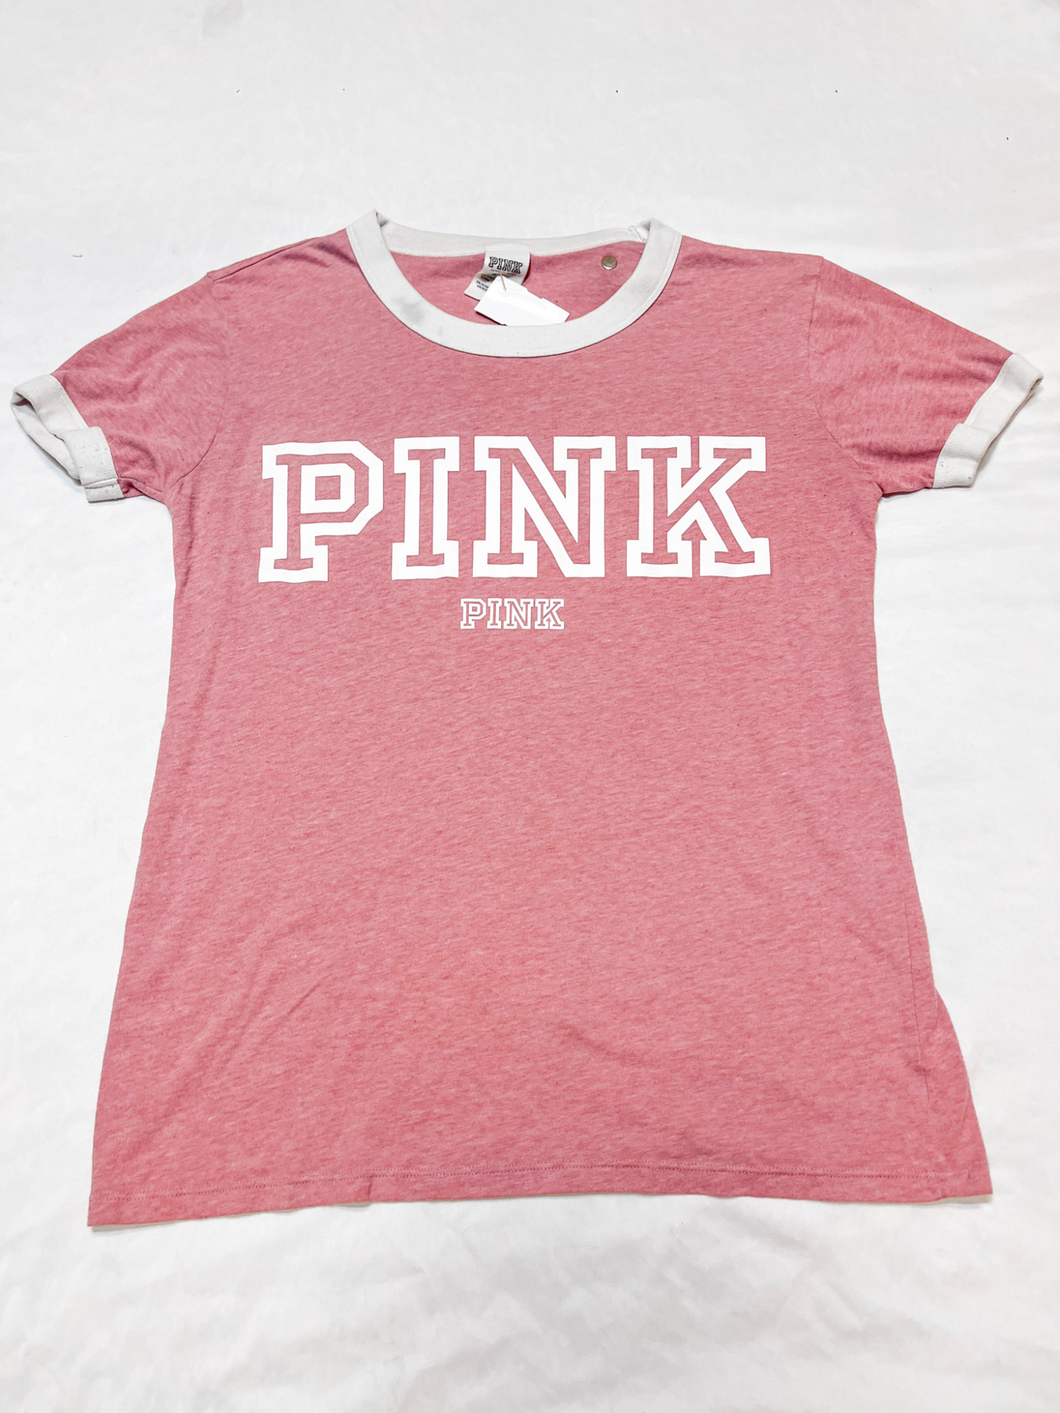 Pink By Victoria's Secret T-Shirt Size Medium *